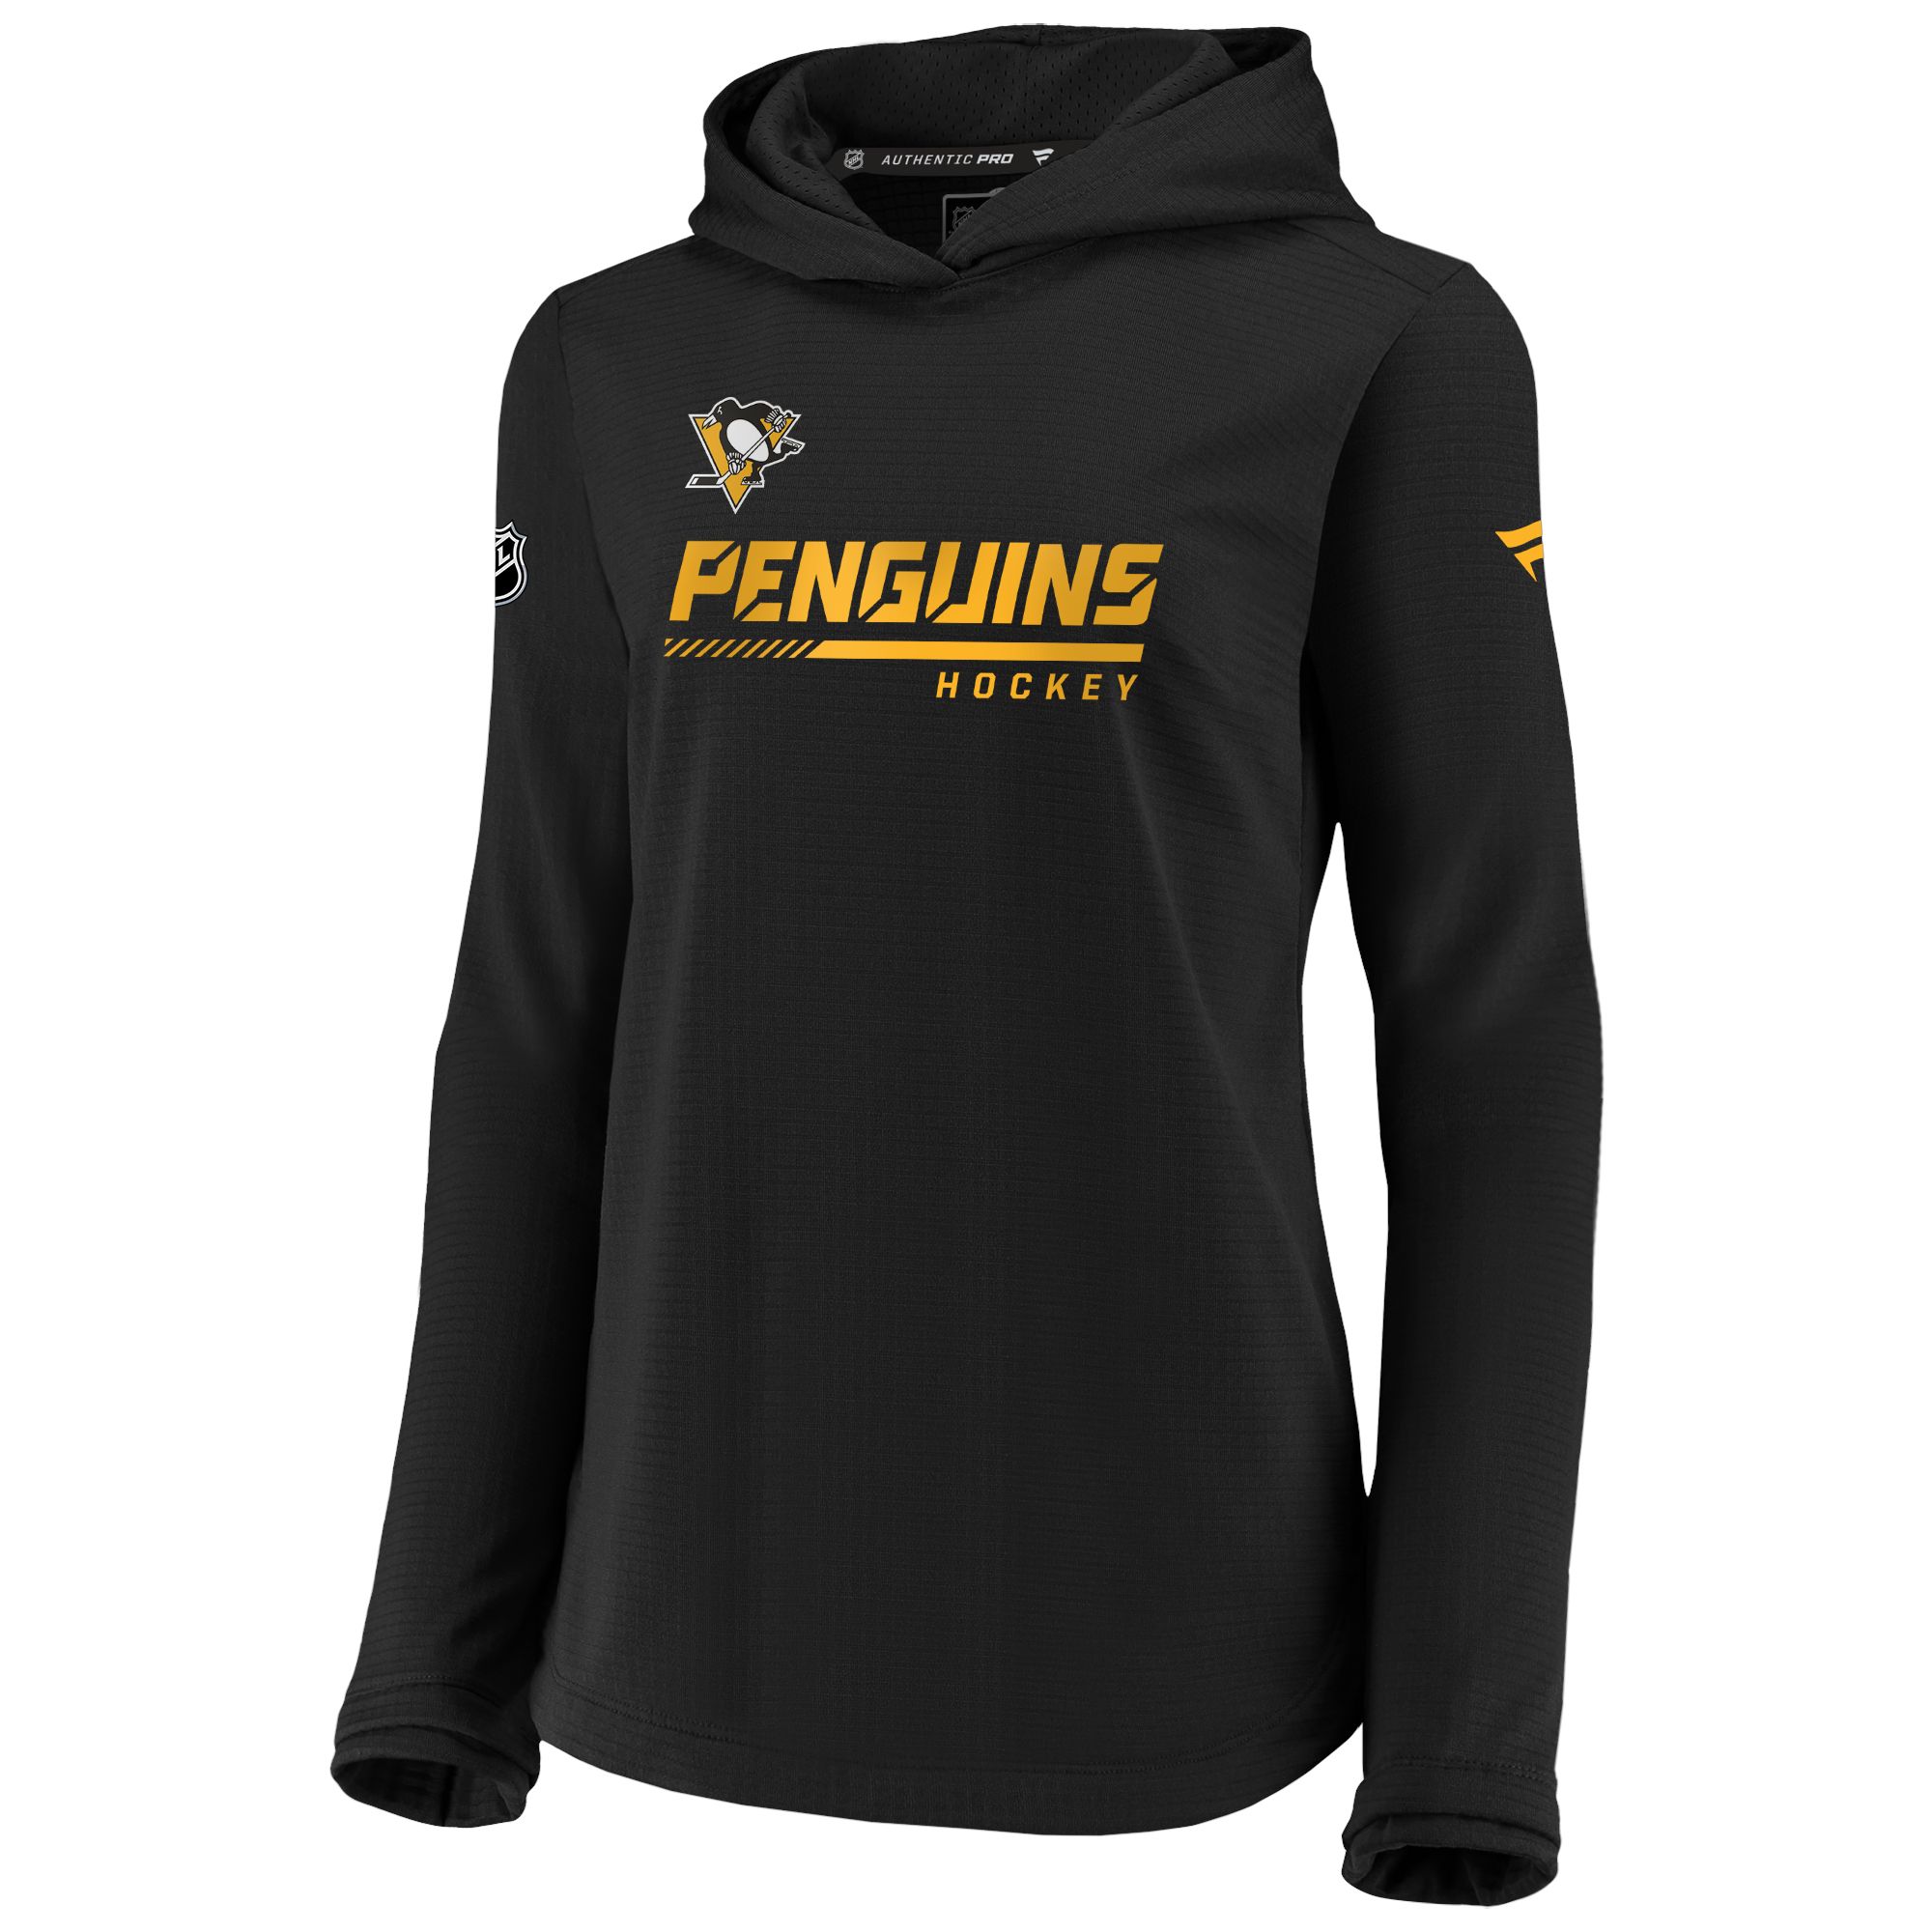 pittsburgh penguins women's jersey